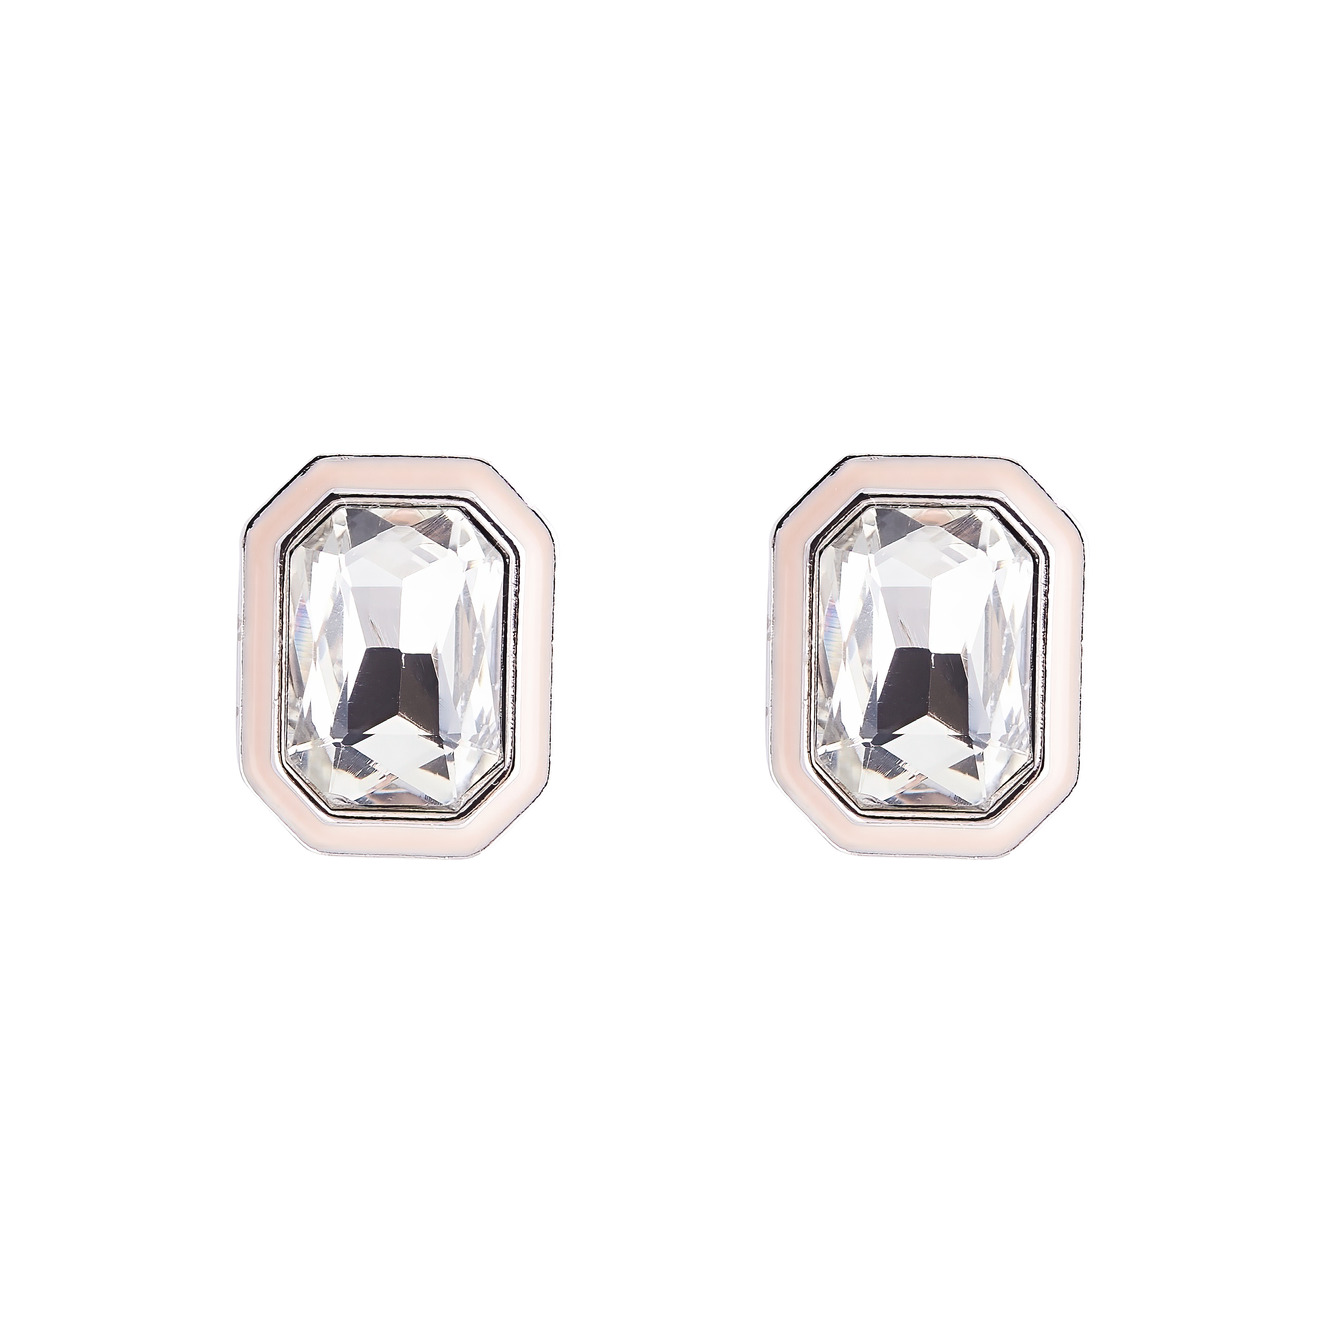 Herald Percy Серебристые серьги с белыми кристаллами и розовой эмалью herald percy серебристые серьги с белыми кристаллами